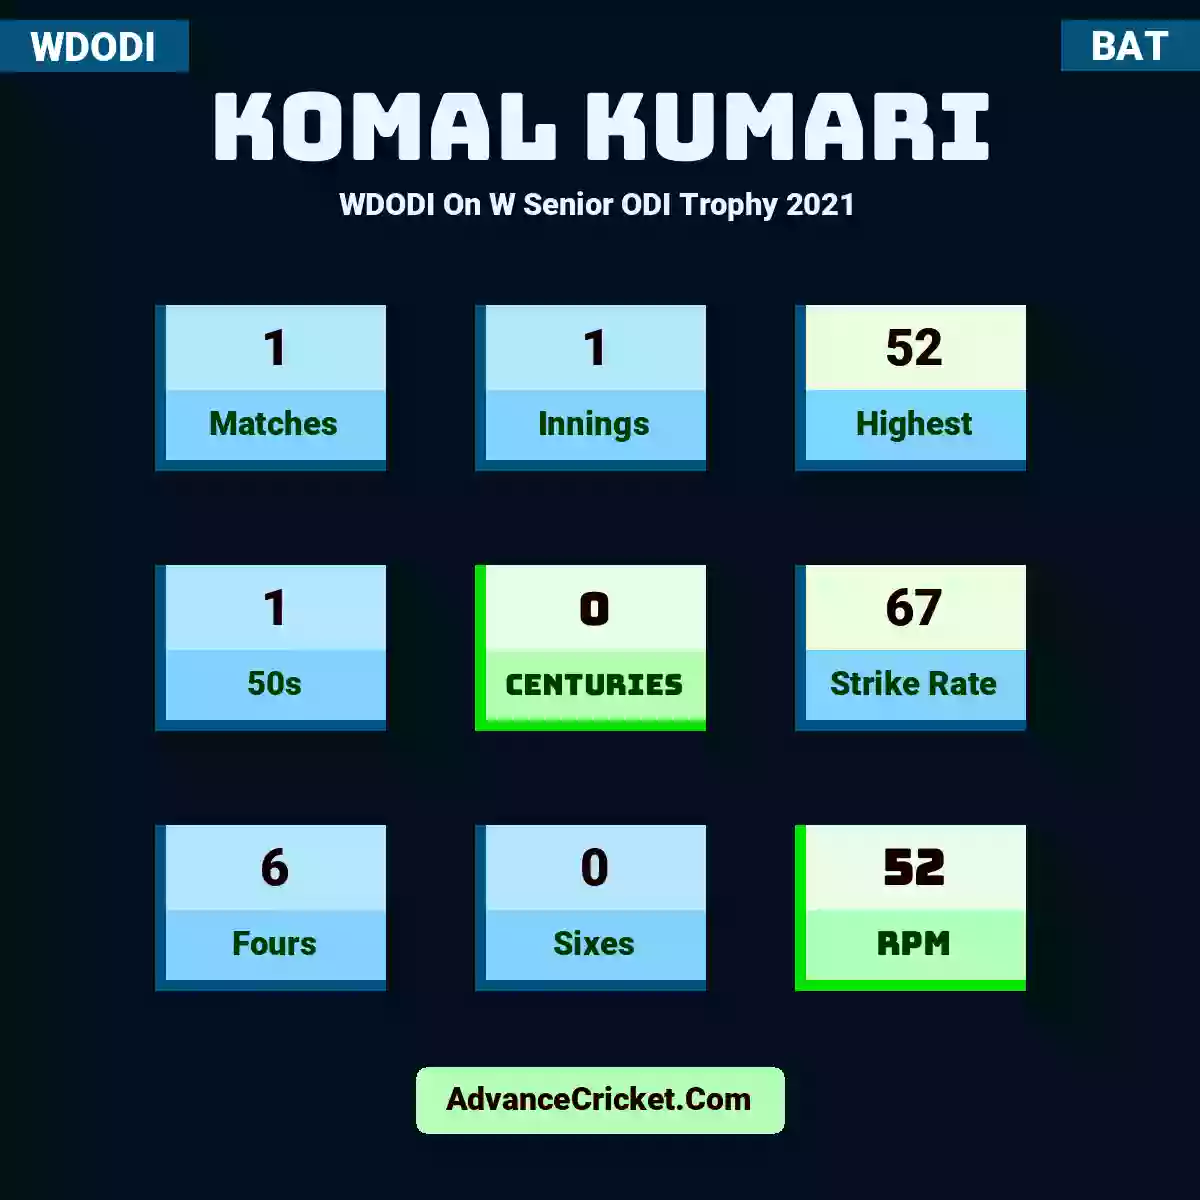 Komal Kumari WDODI  On W Senior ODI Trophy 2021, Komal Kumari played 1 matches, scored 52 runs as highest, 1 half-centuries, and 0 centuries, with a strike rate of 67. K.Kumari hit 6 fours and 0 sixes, with an RPM of 52.